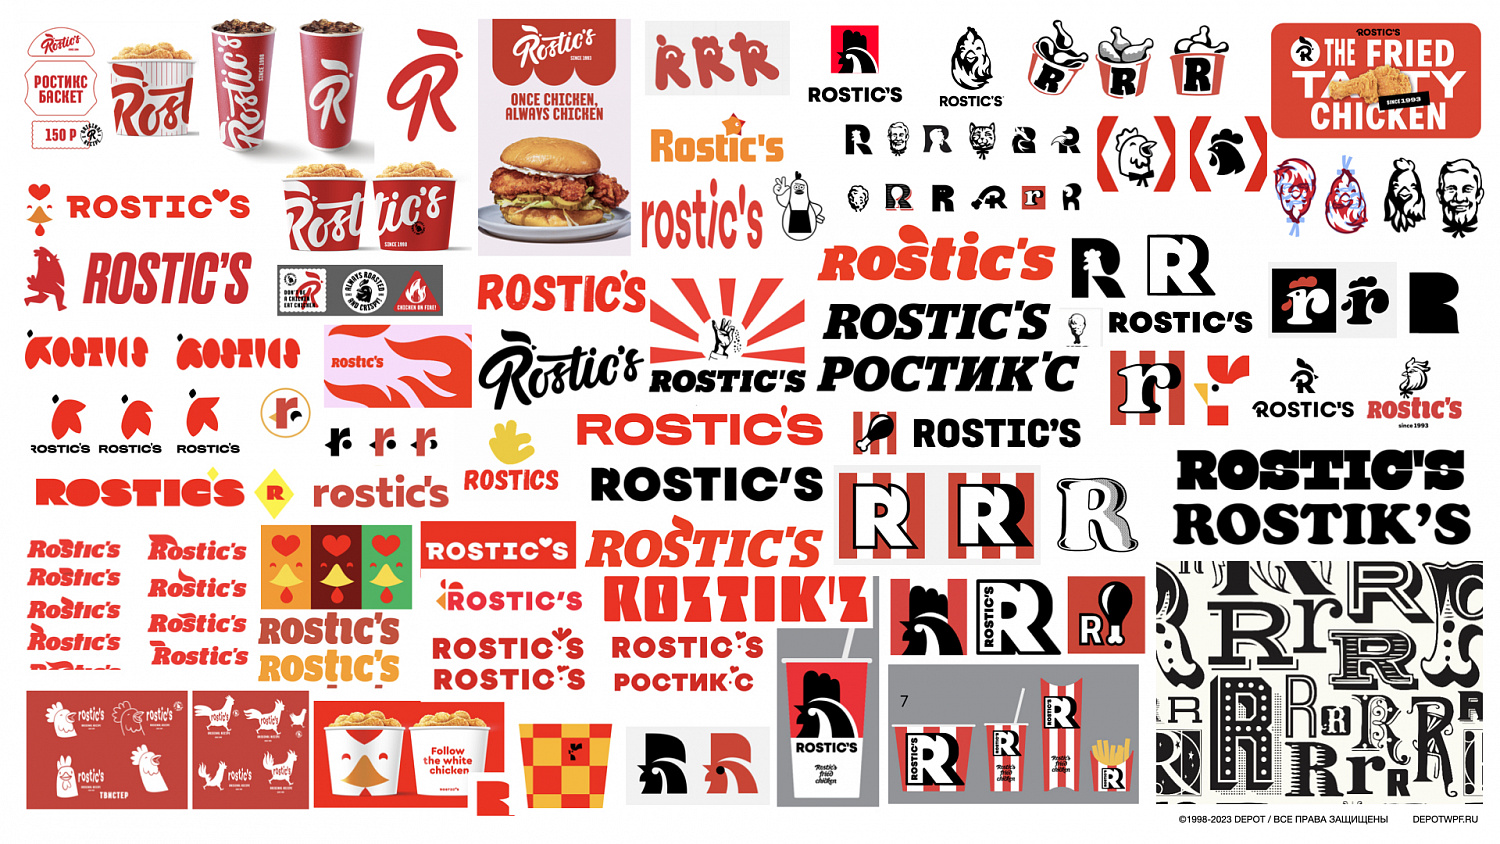 Rostic's: Локализация KFC - Портфолио Depot